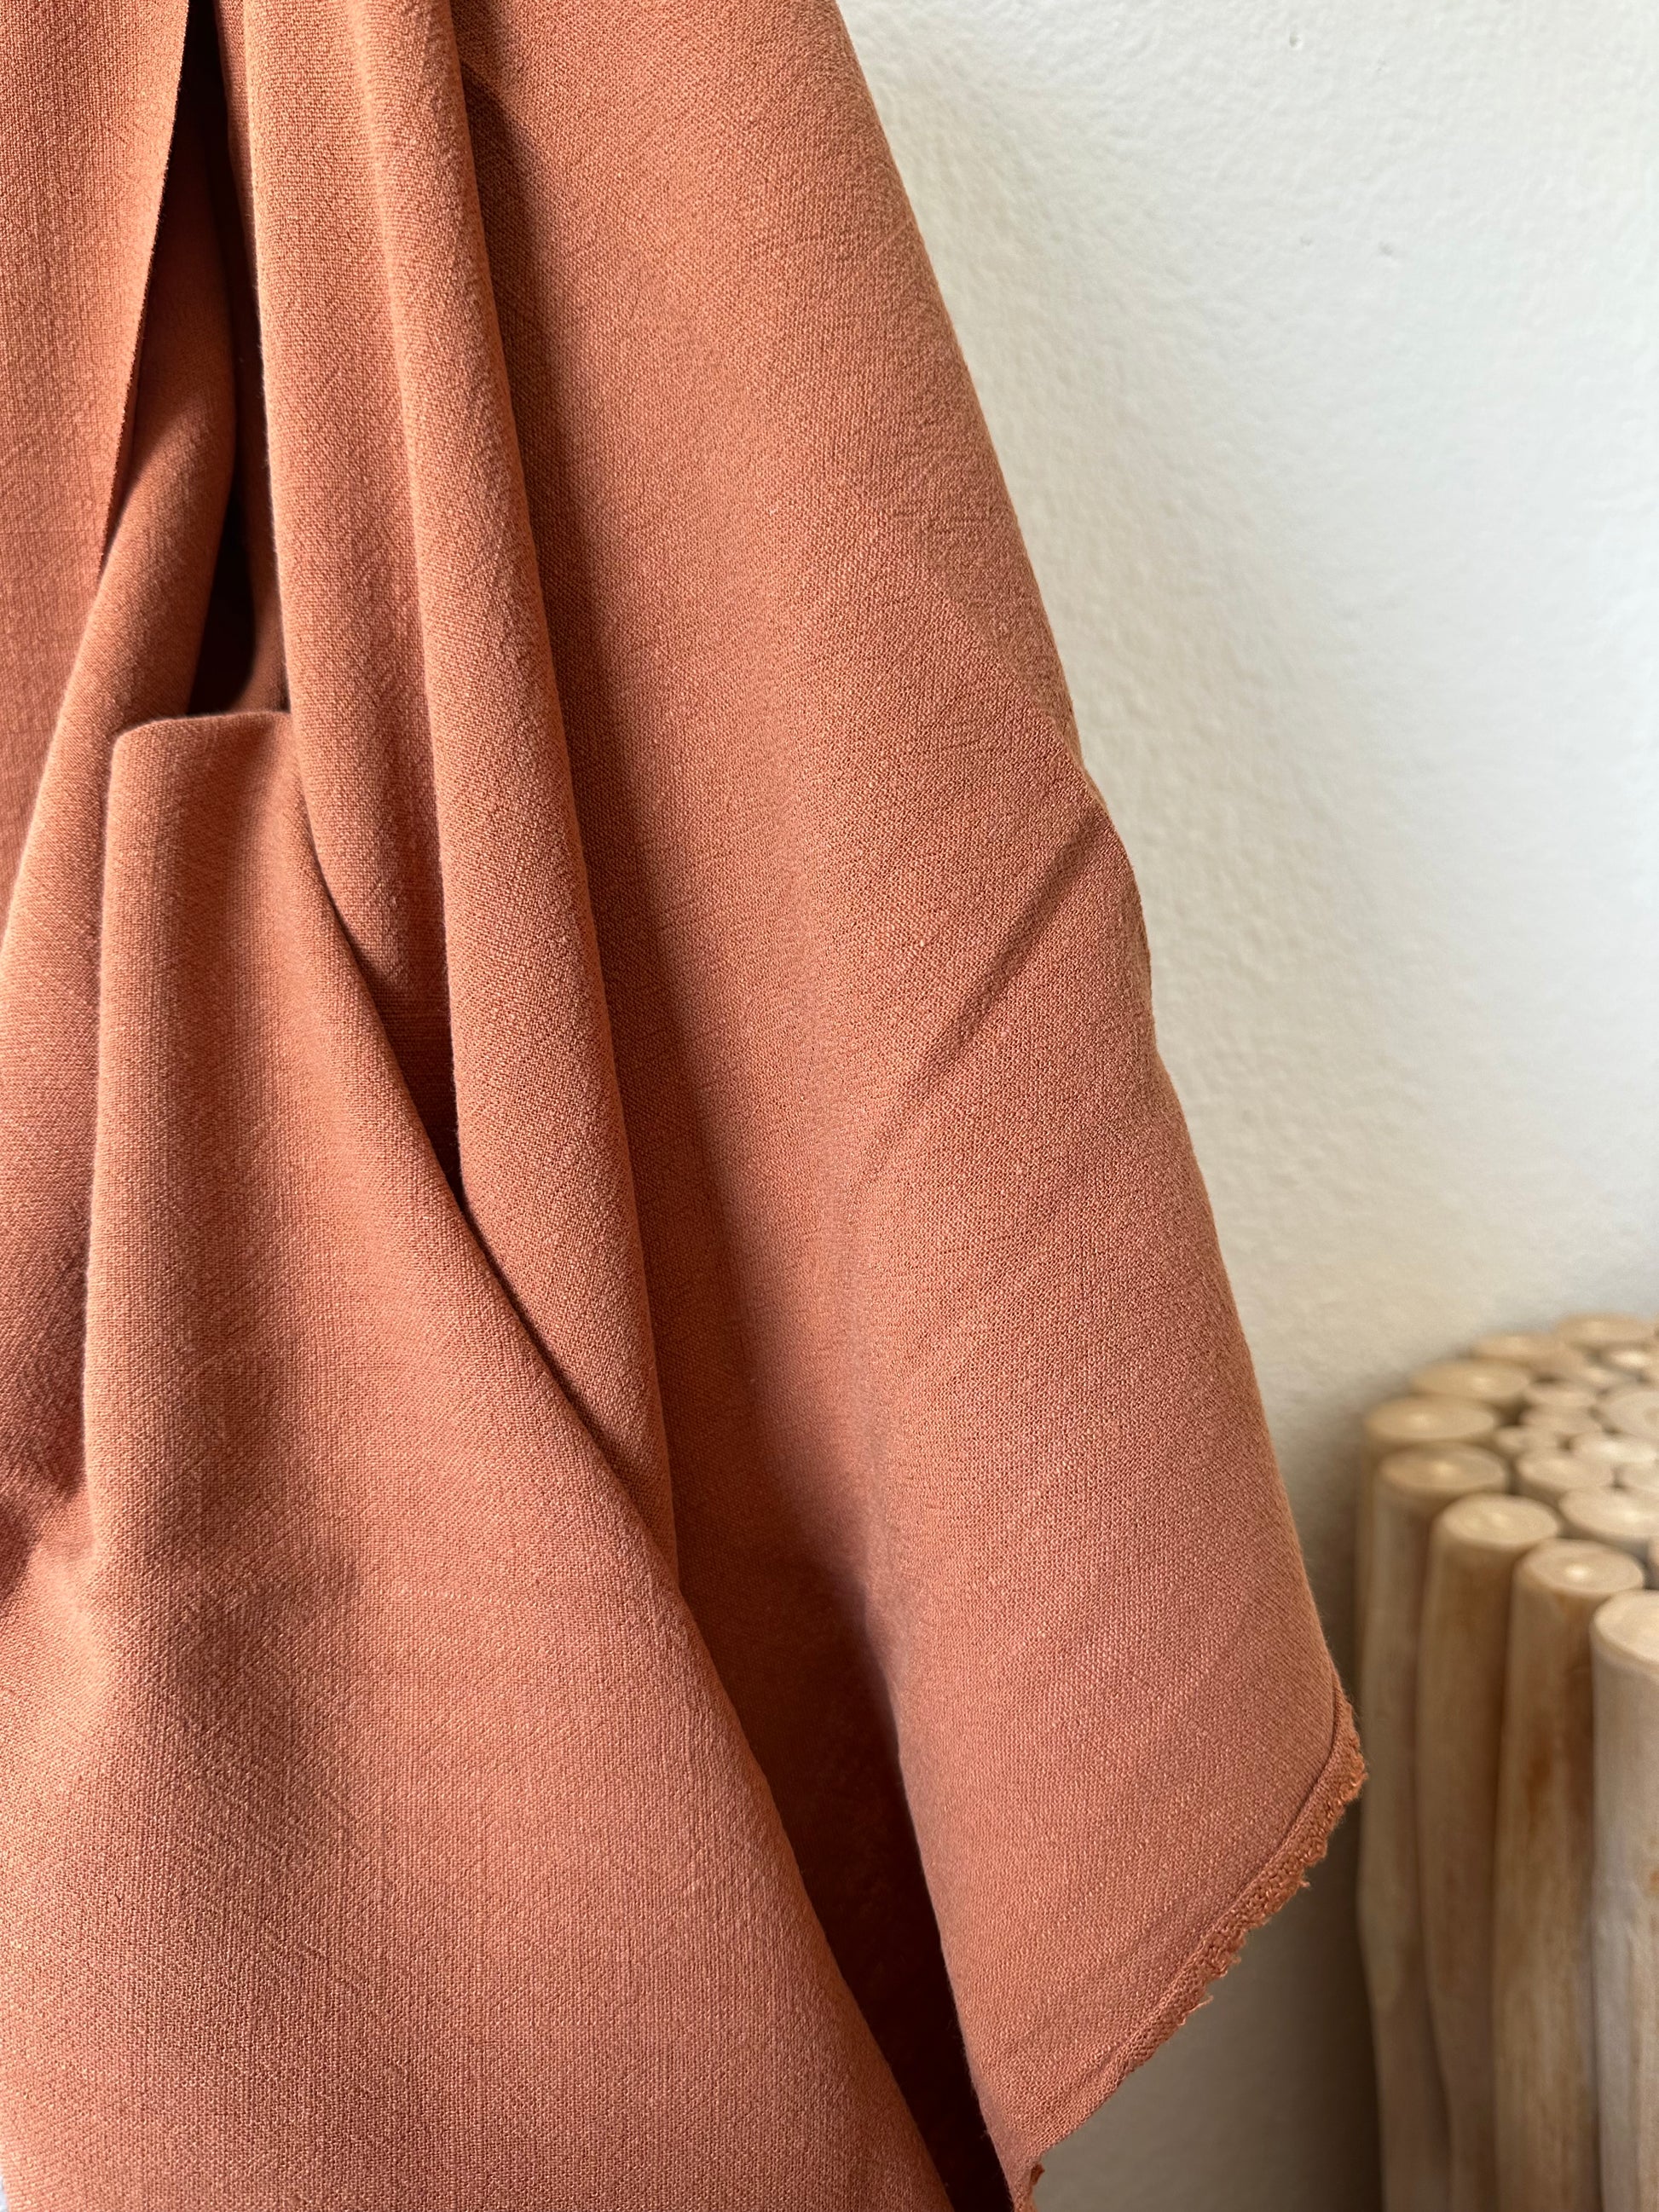 130x50cm thin solid color Sand washing treatment cotton linen cloth slub  soft fabric diy dress robes clothing handmade